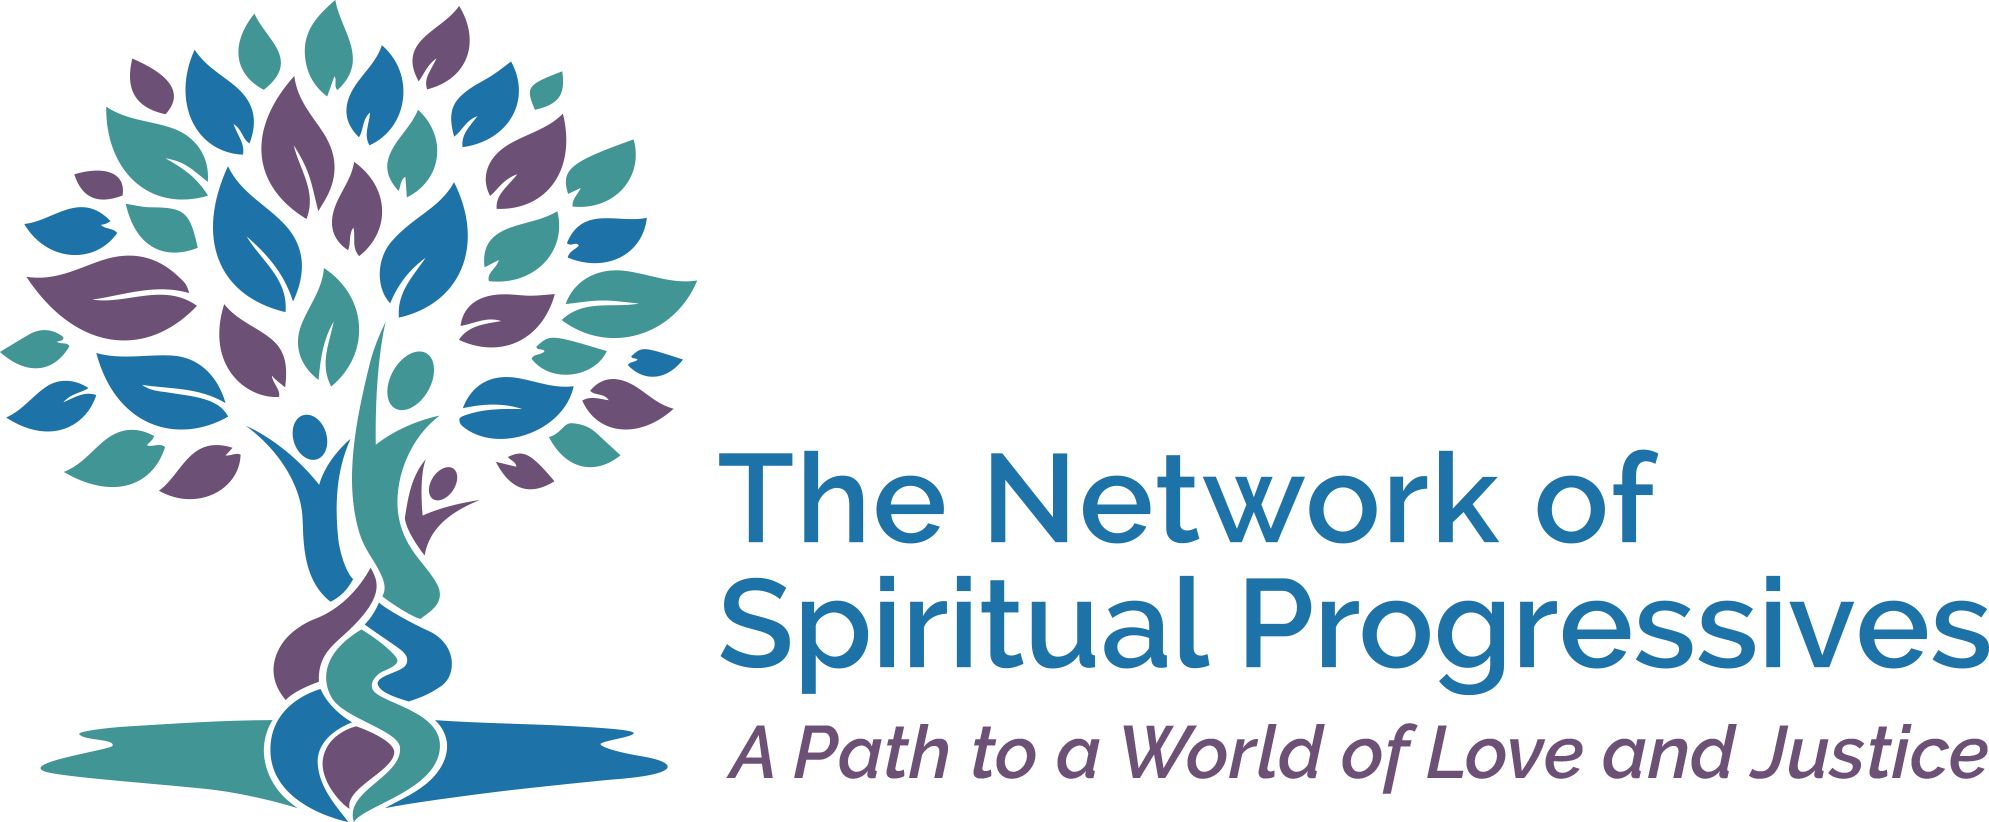 The Network of Spiritual Progressives